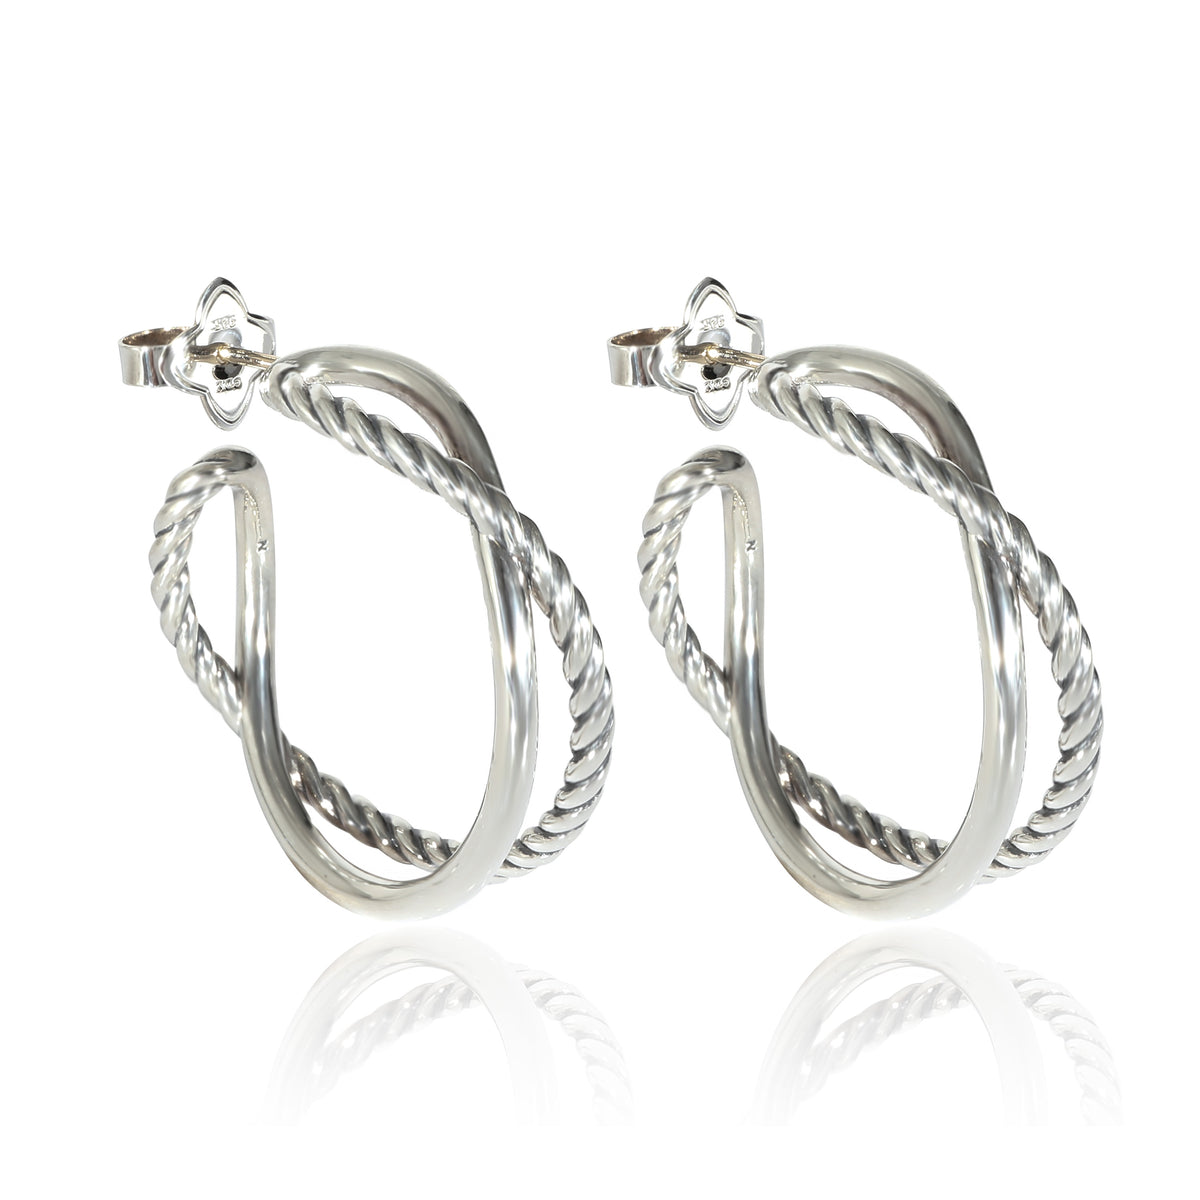 David Yurman Crossover Hoop Earrings in Sterling Silver